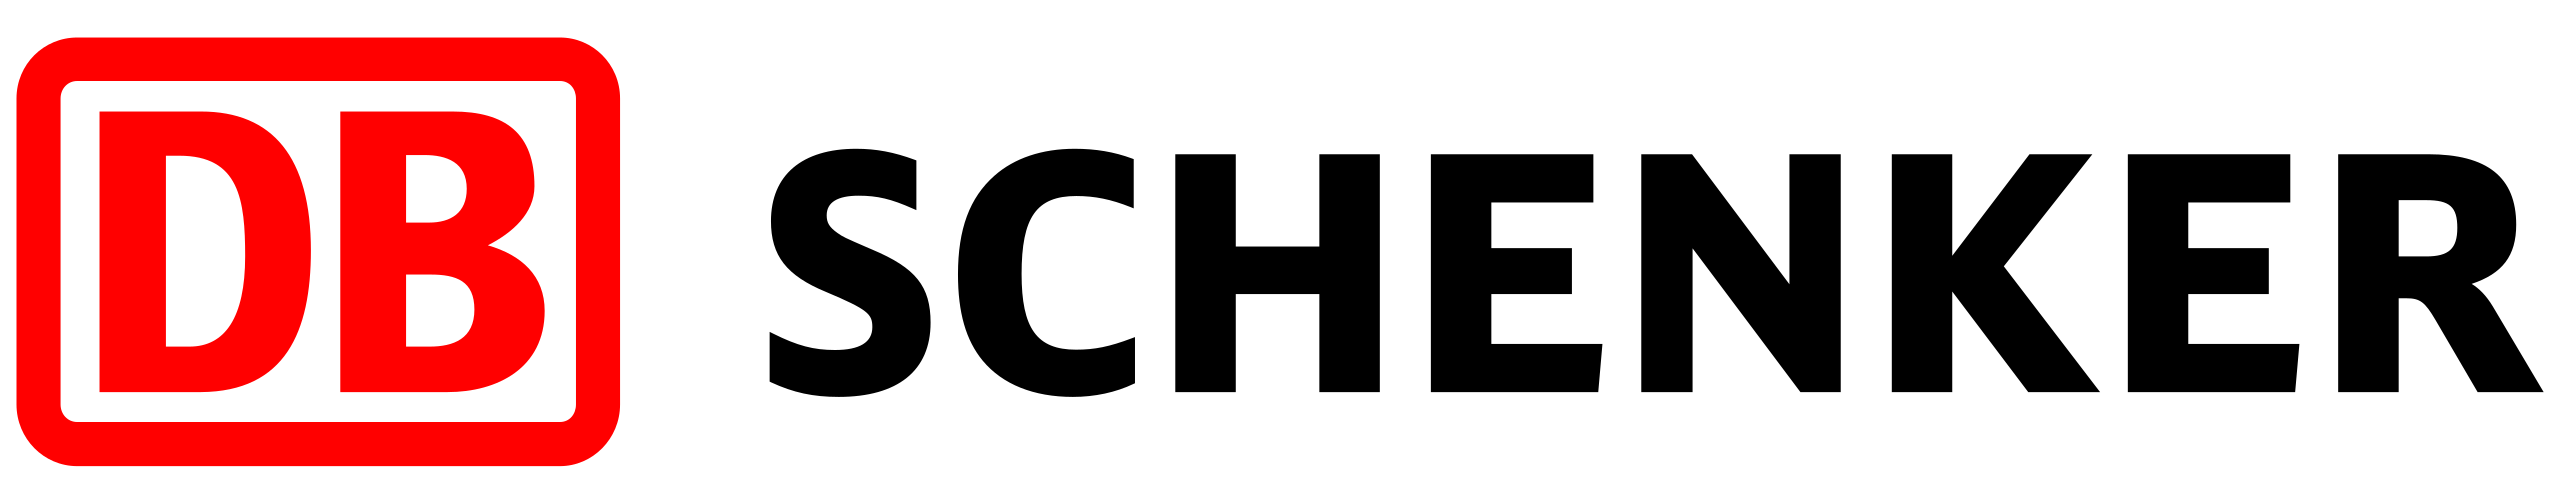 dbschenker-logo.png